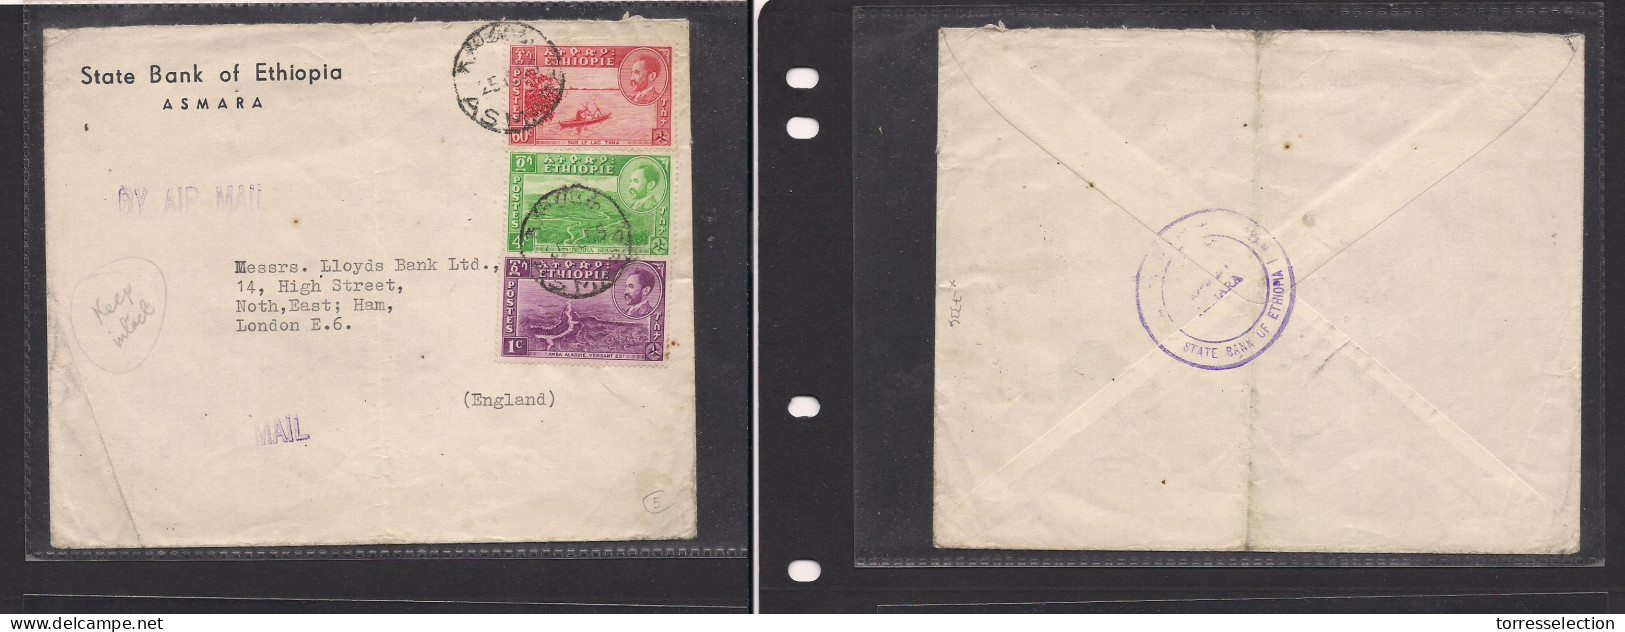 ETHIOPIA. Ethiopia Cover 1955 Asmara To UK Mult Fkd Comercial Env. Easy Deal. XSALE. - Ethiopie